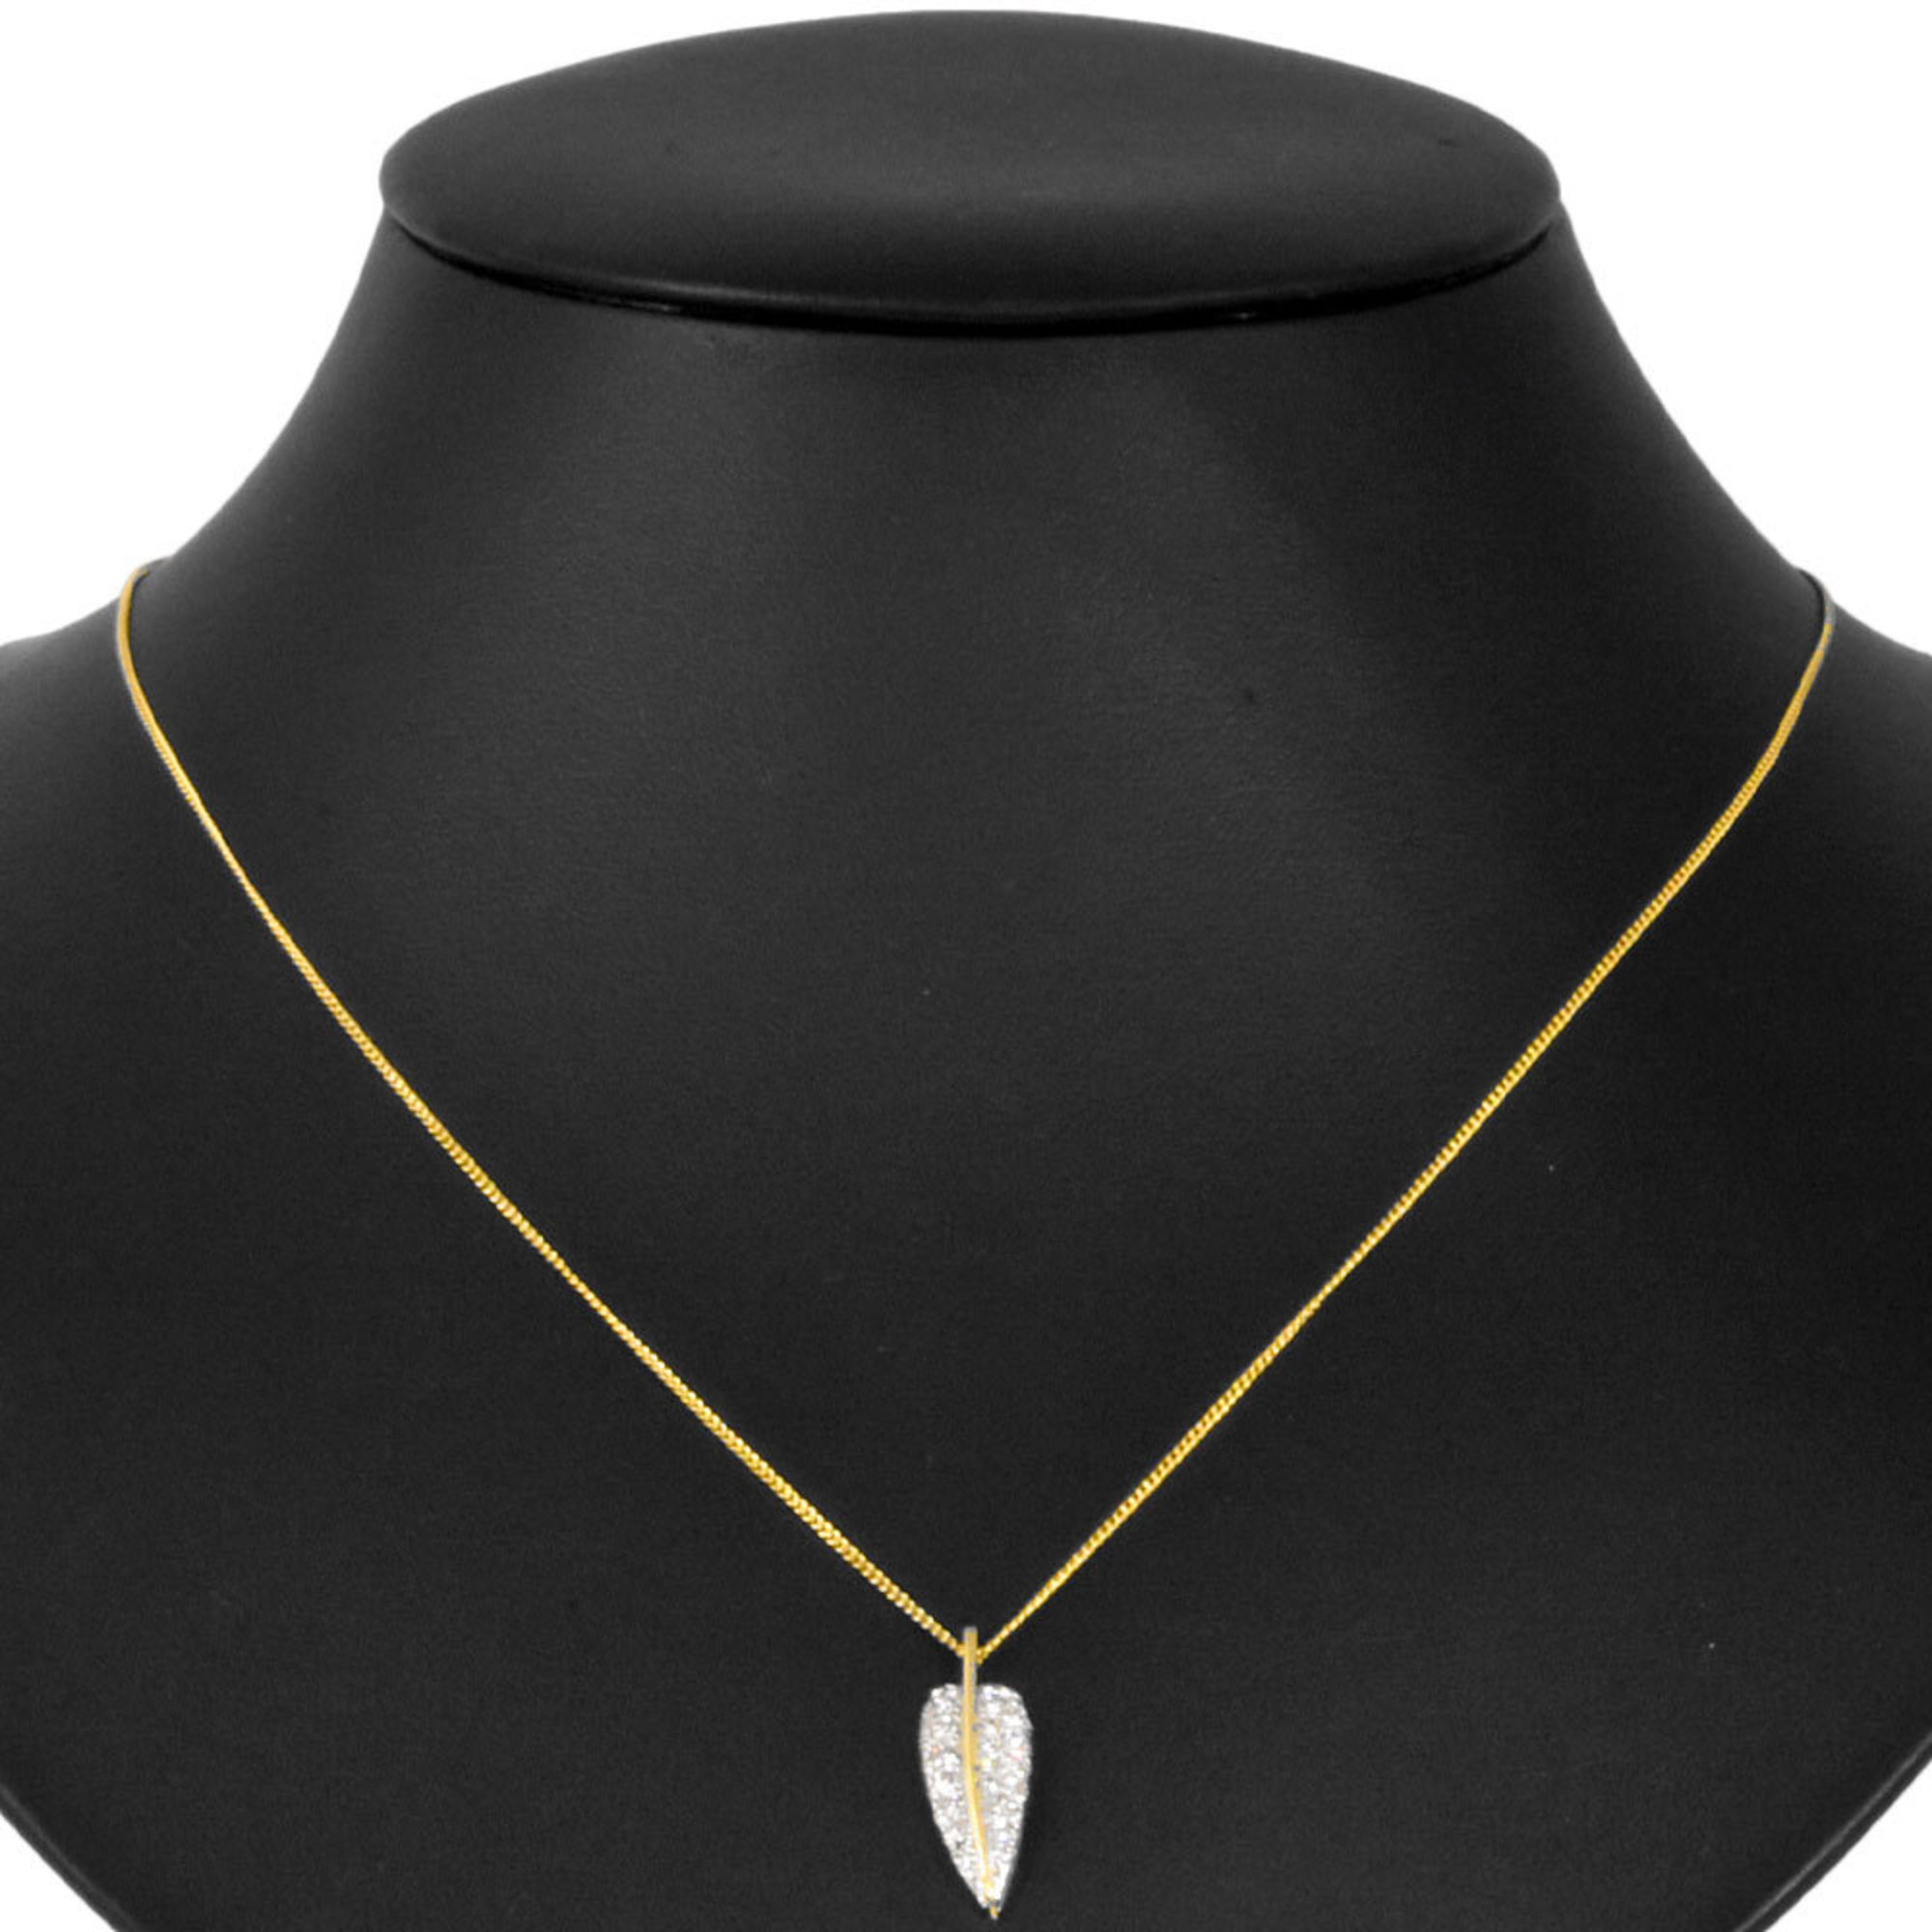 Tiffany Tiffany&Co leaf feather diamond necklace K18YG/Pt950 pendant